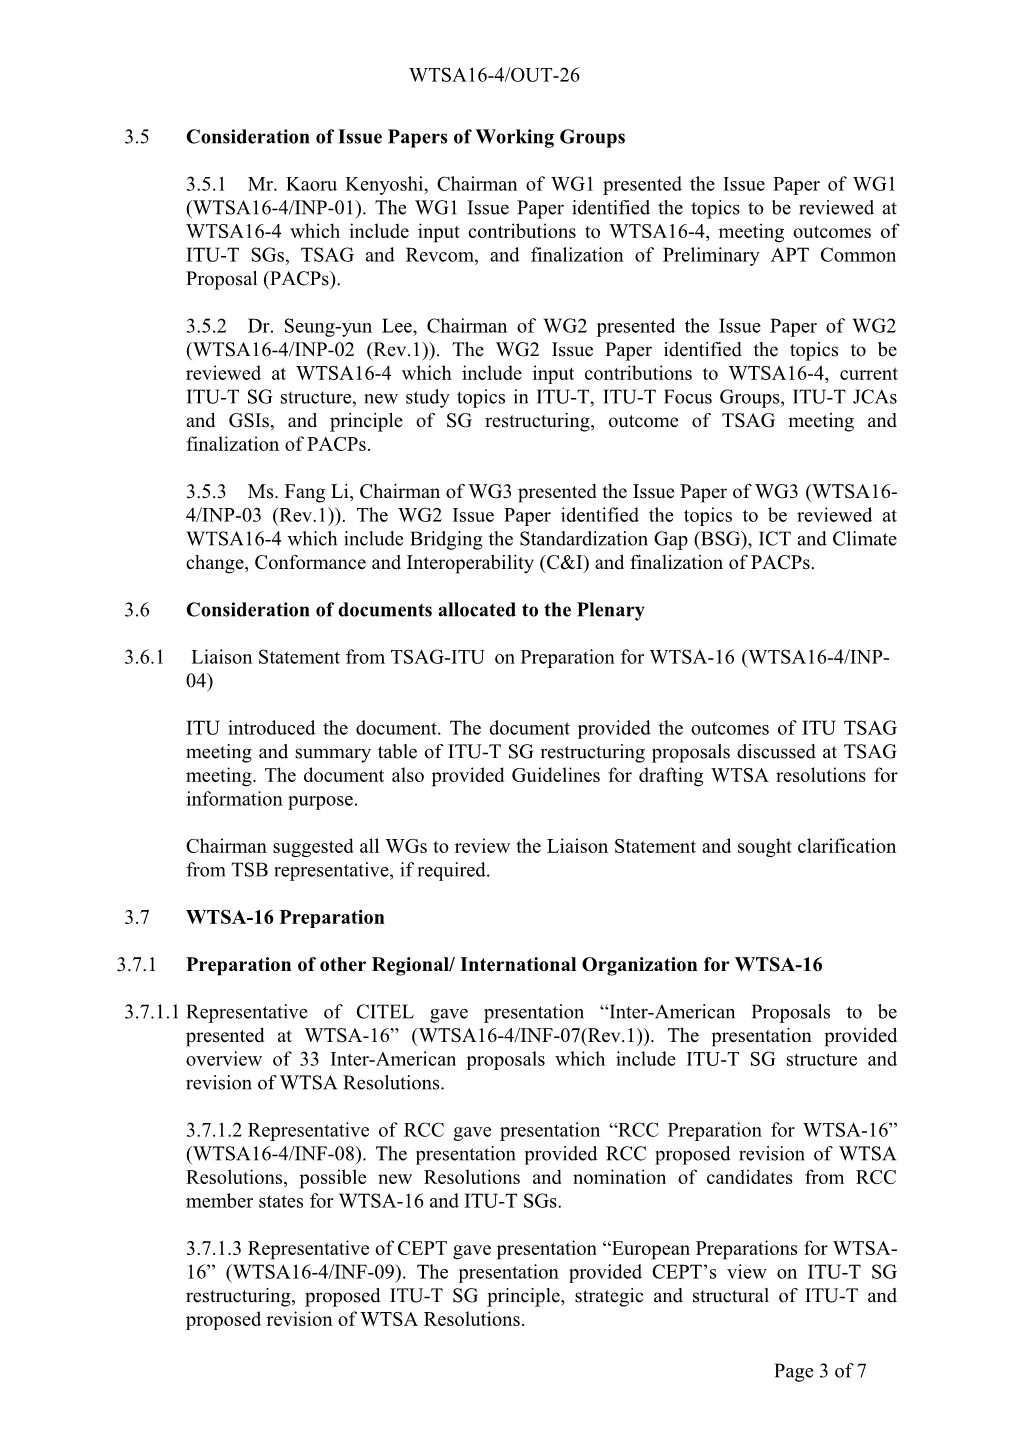 DRAFT Summary Record of the 4TH Meeting of the APT Preparatory GROUP for WTSA-16 (WTSA16-4)